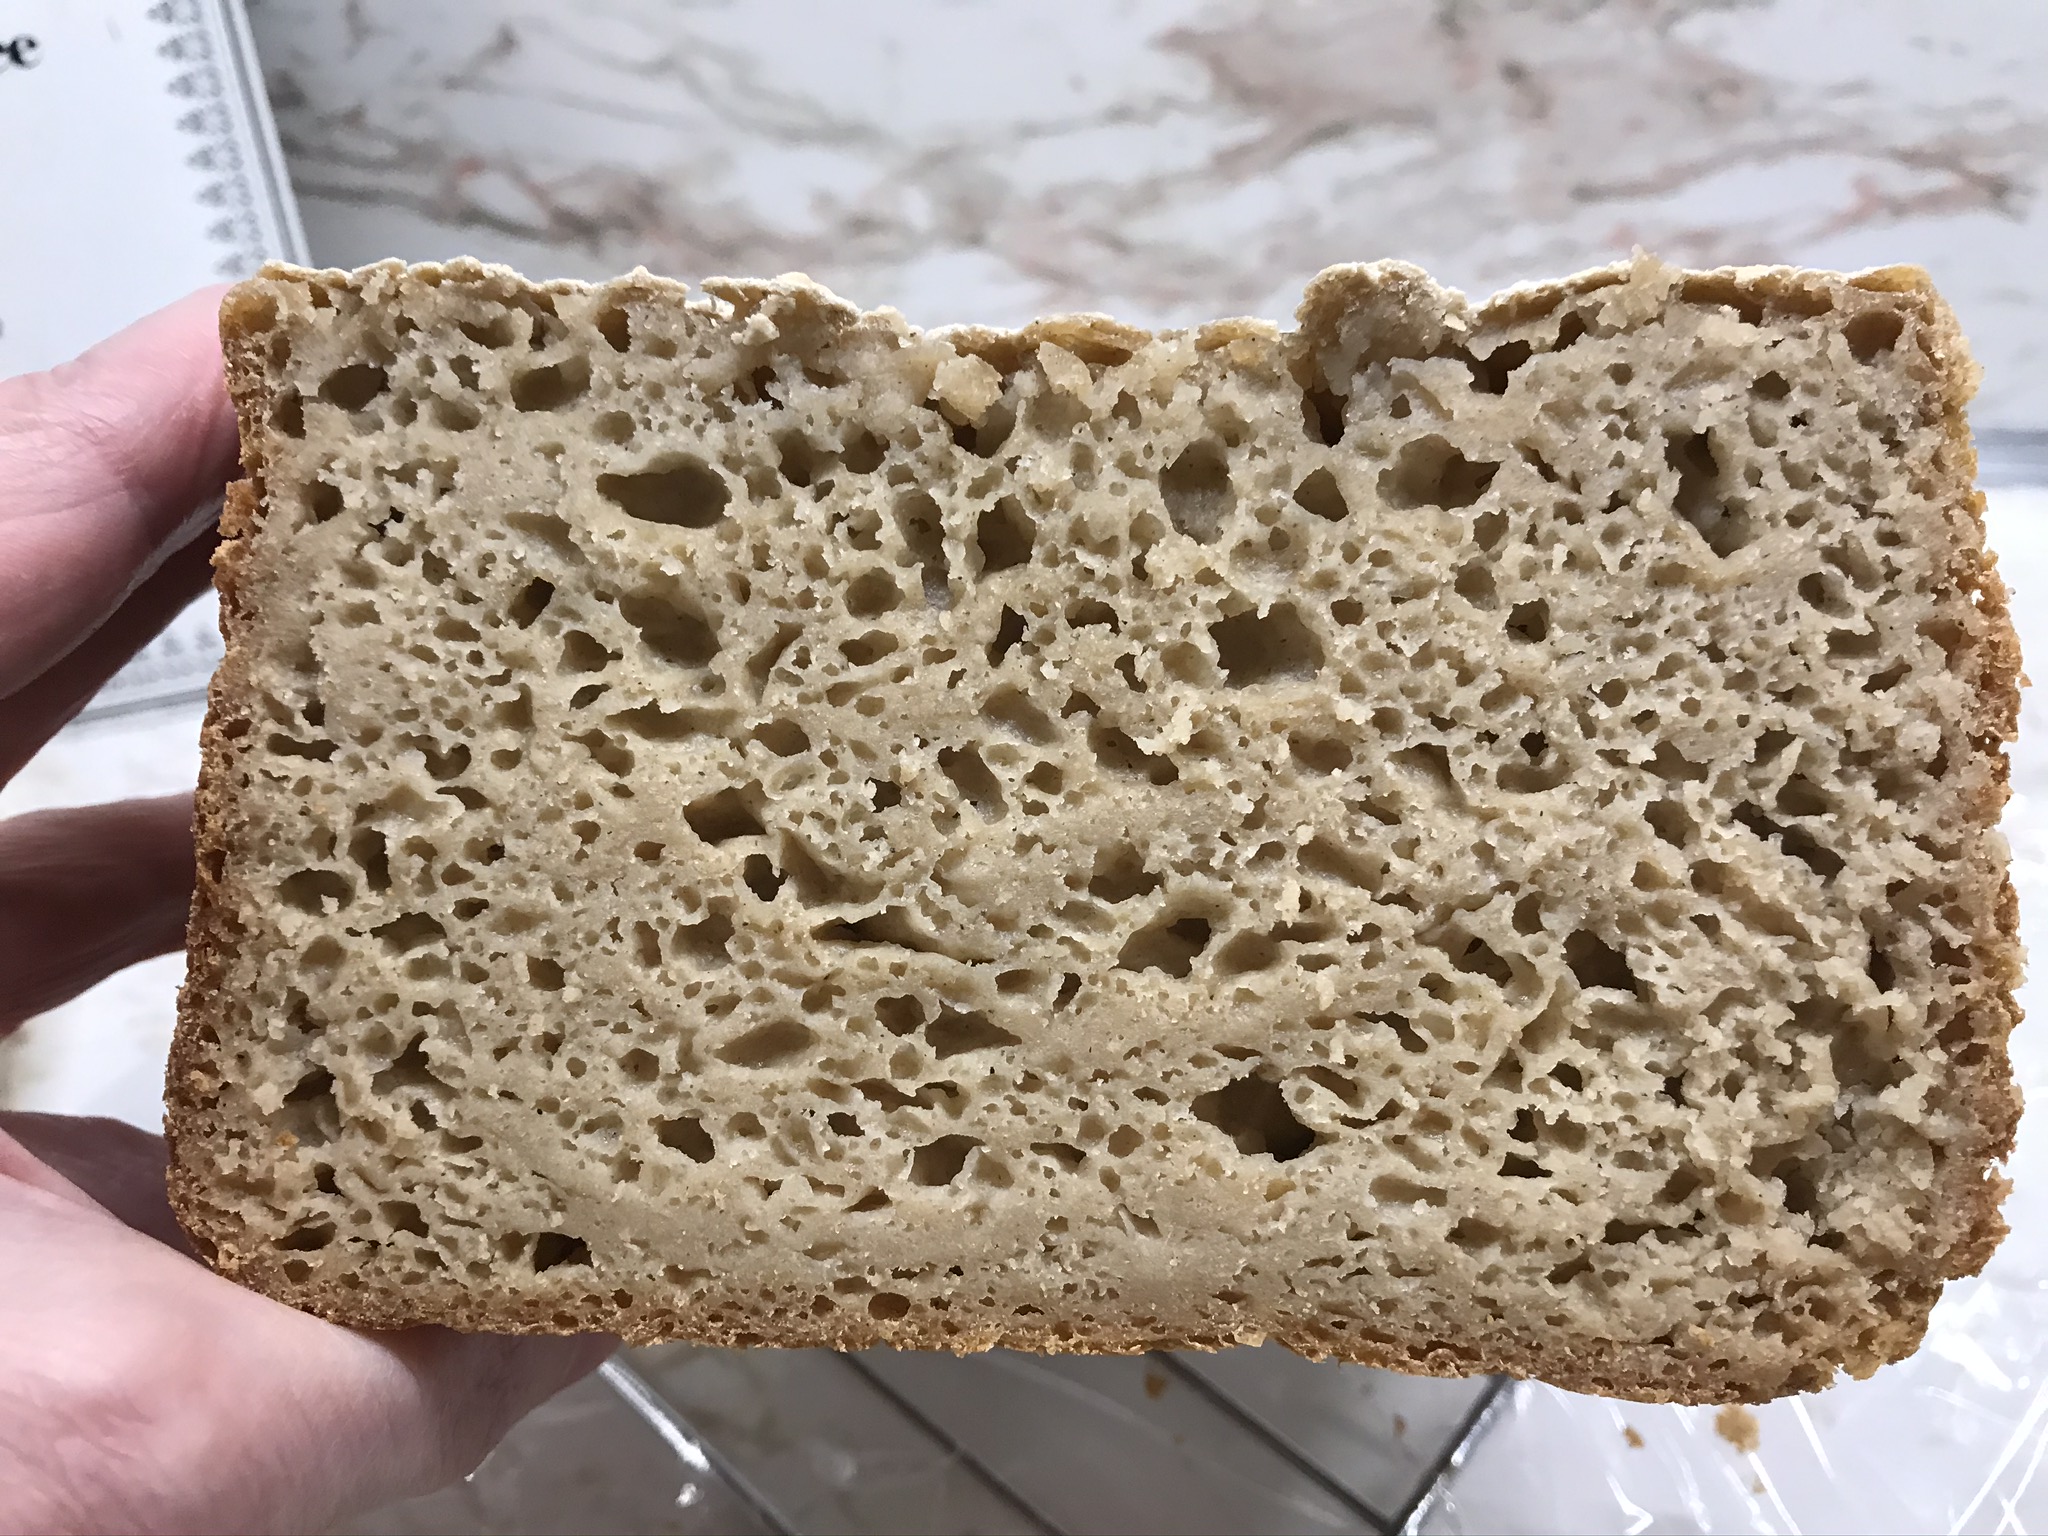 Slice of Bread